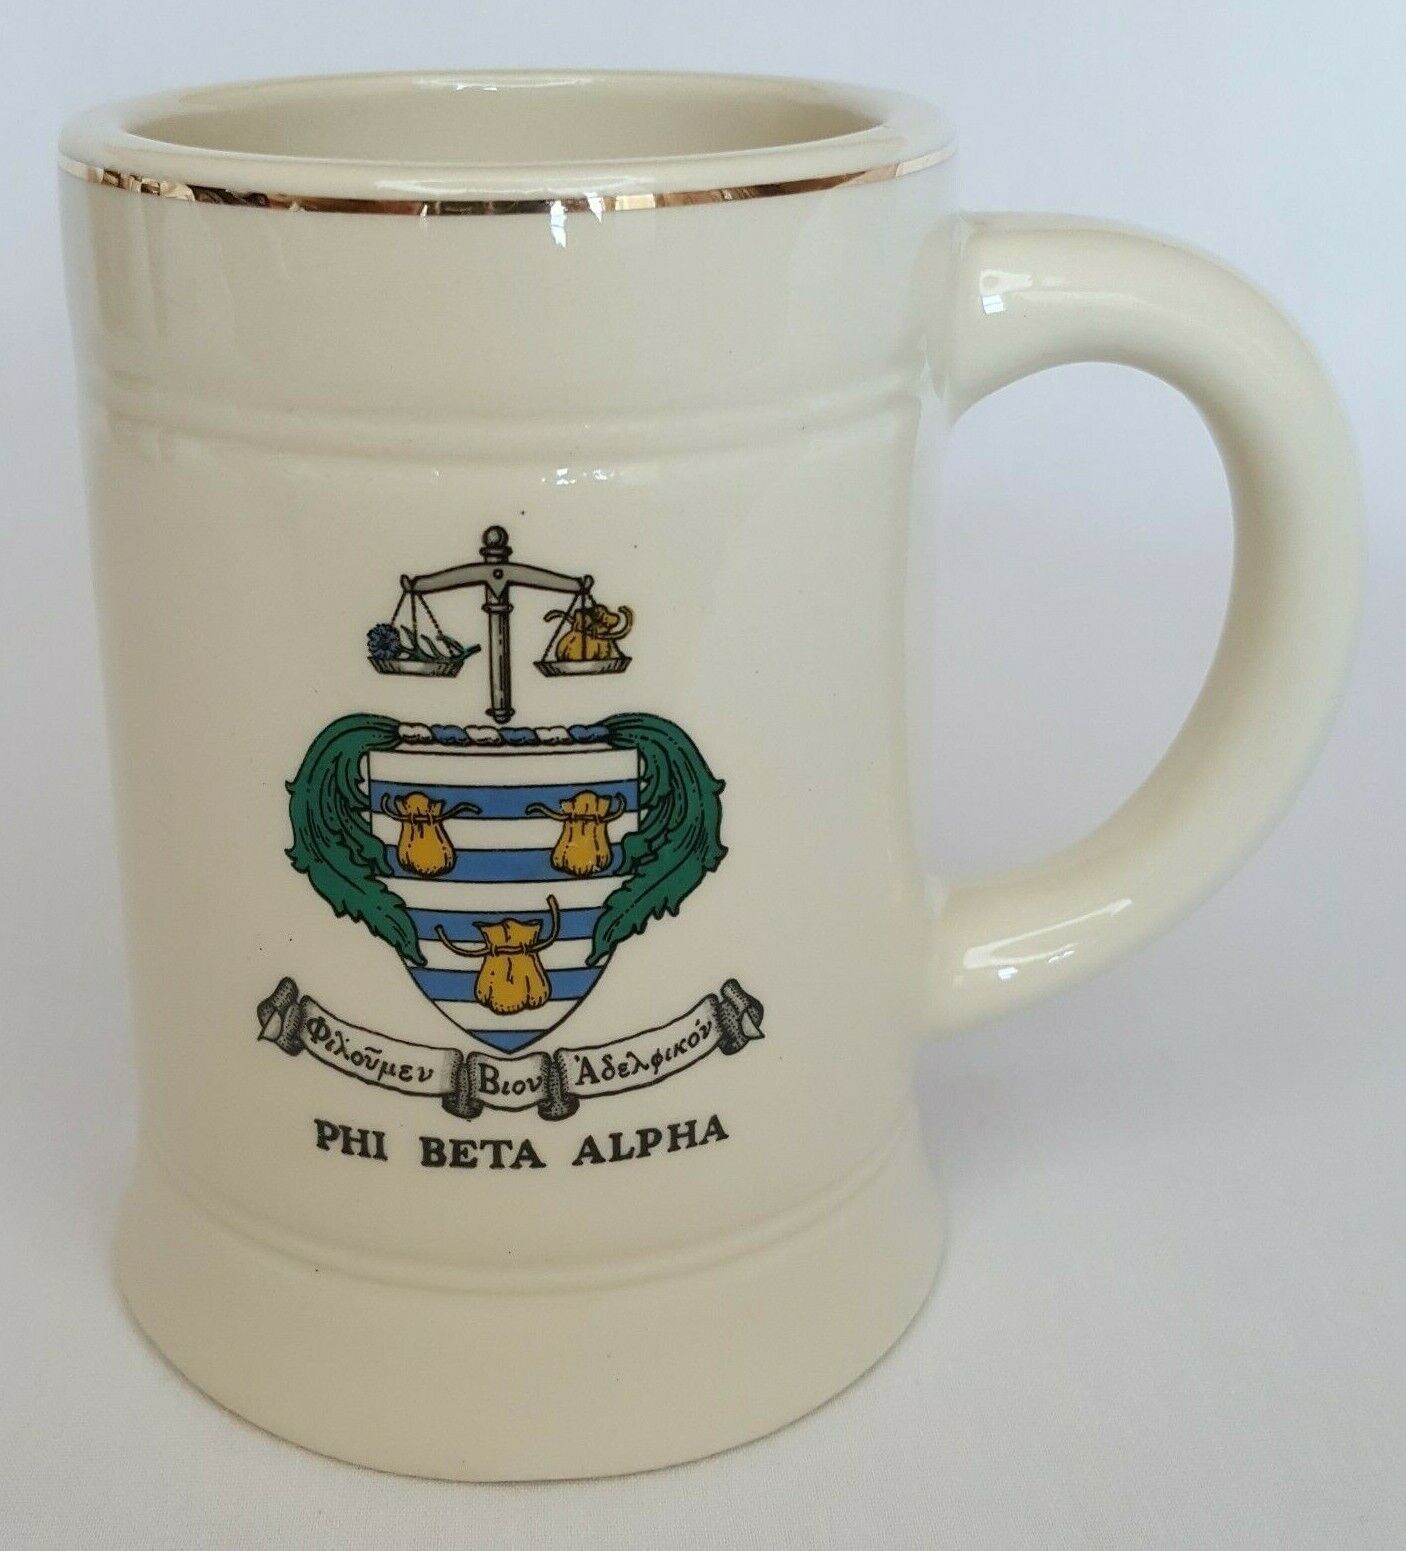 Vintage Phi Beta Alpha Sorority Stein, Tankard Cup Mug by Balfour Ceramic